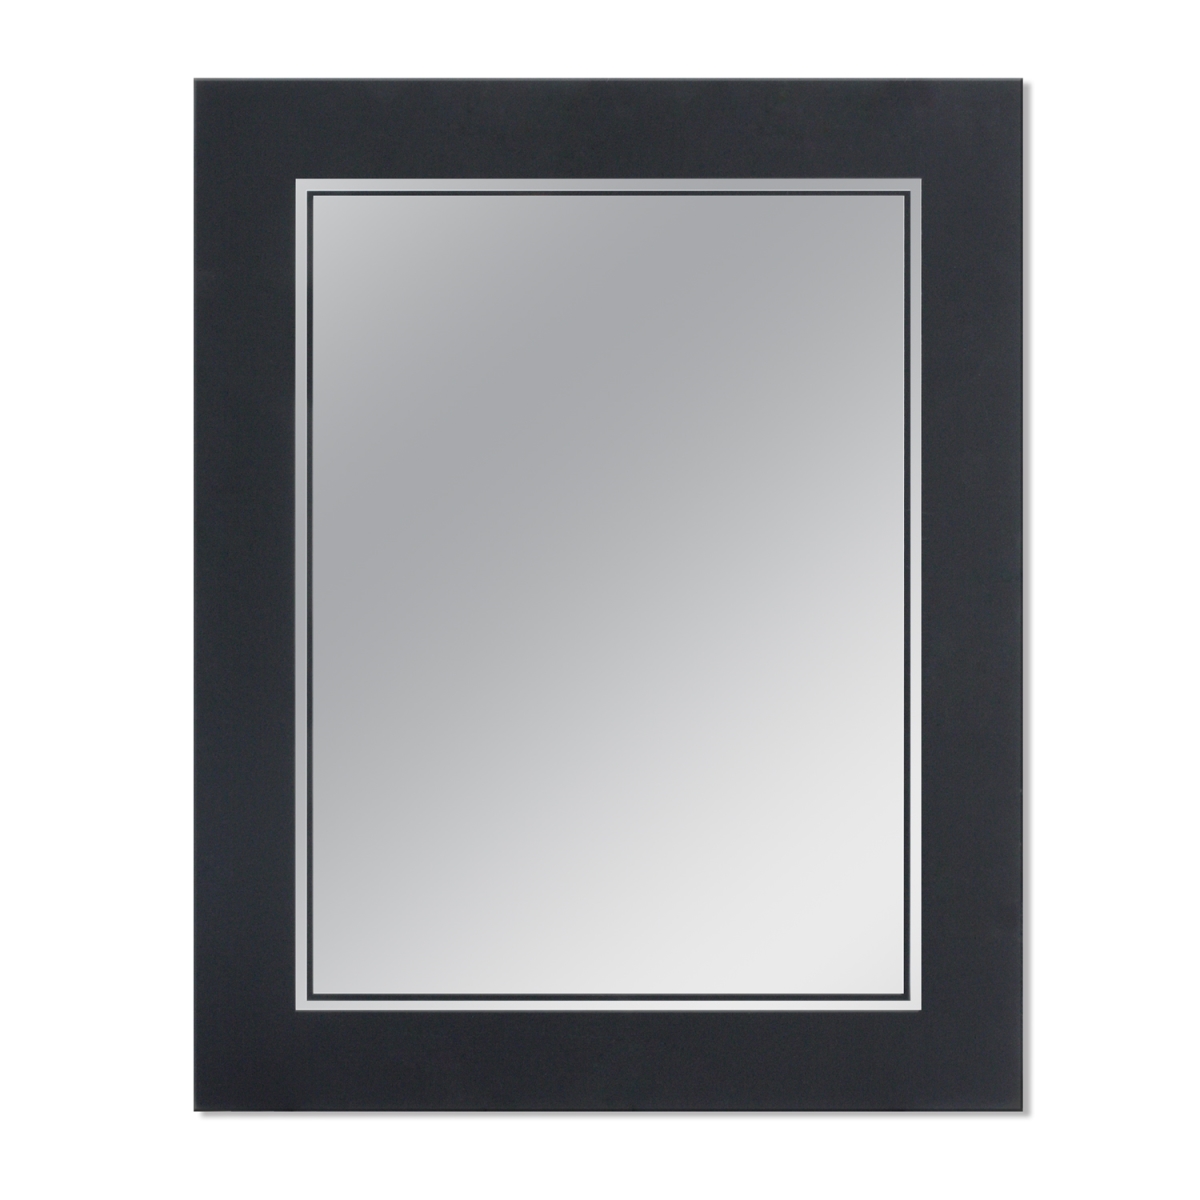 Head West 8257 23.5 X 29.5 In. Frosted Single Frameless Wall Mirror - Matte Black